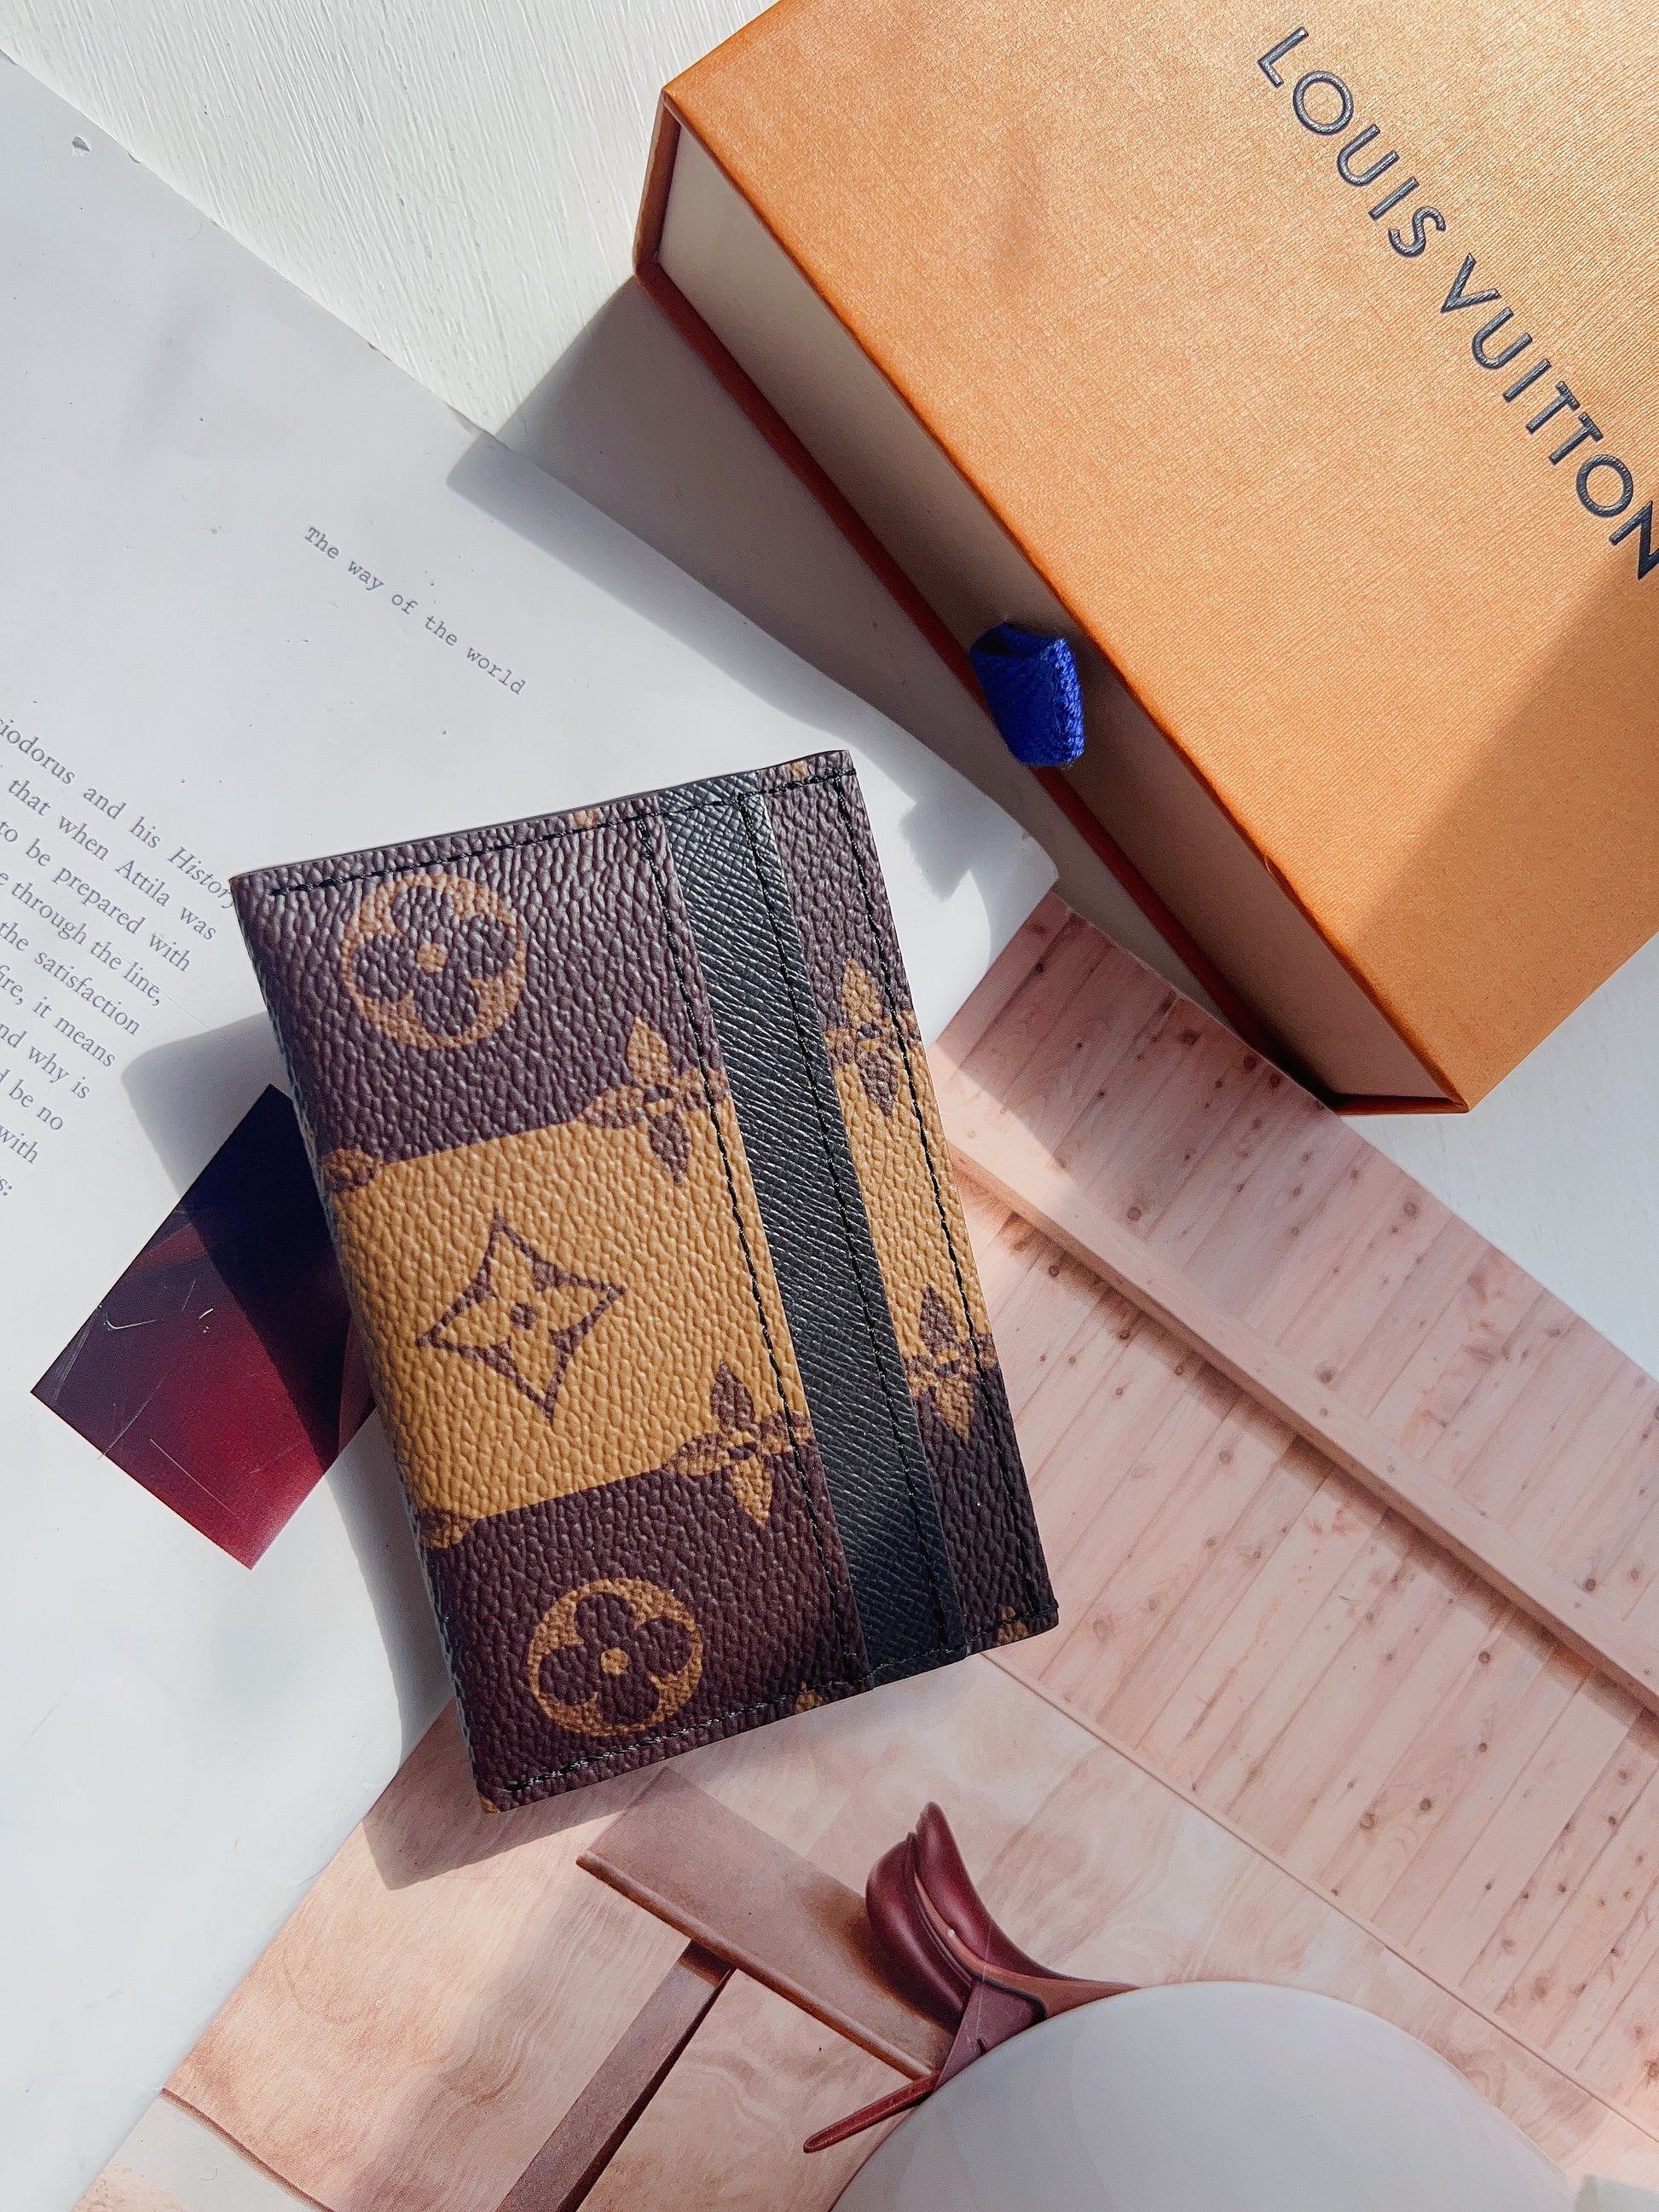 New Louis Vuitton Nigo Double Card Holder Limited Edition Stripes Monogram